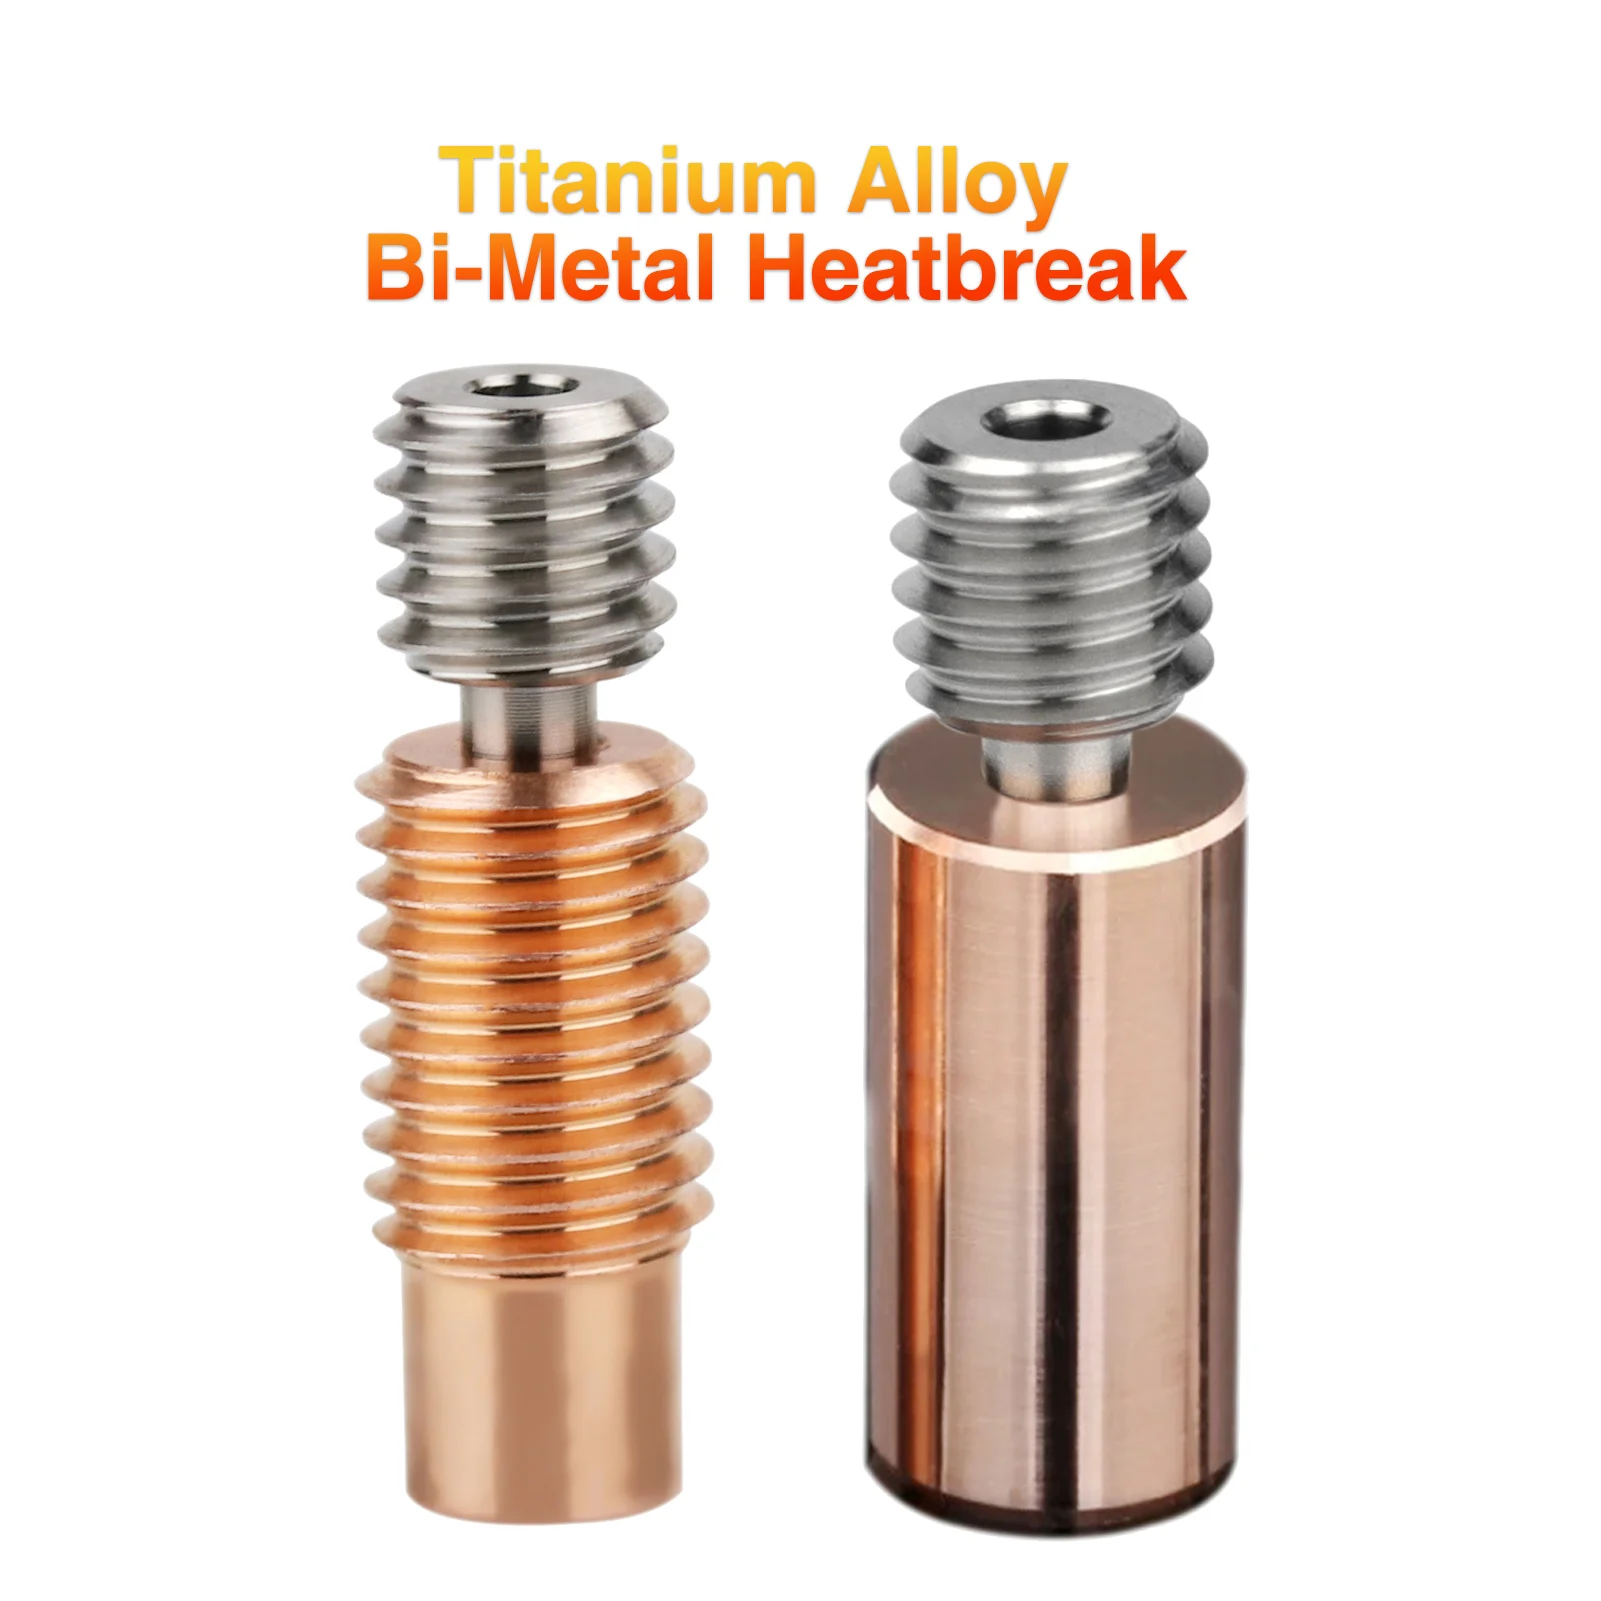 

3D Printer V6 Titanium Alloy Bi-Metal Heatbreak For E3D V6 HOTEND Heater Block For Prusa i3 MK3 Break 1.75MM Filament Smooth